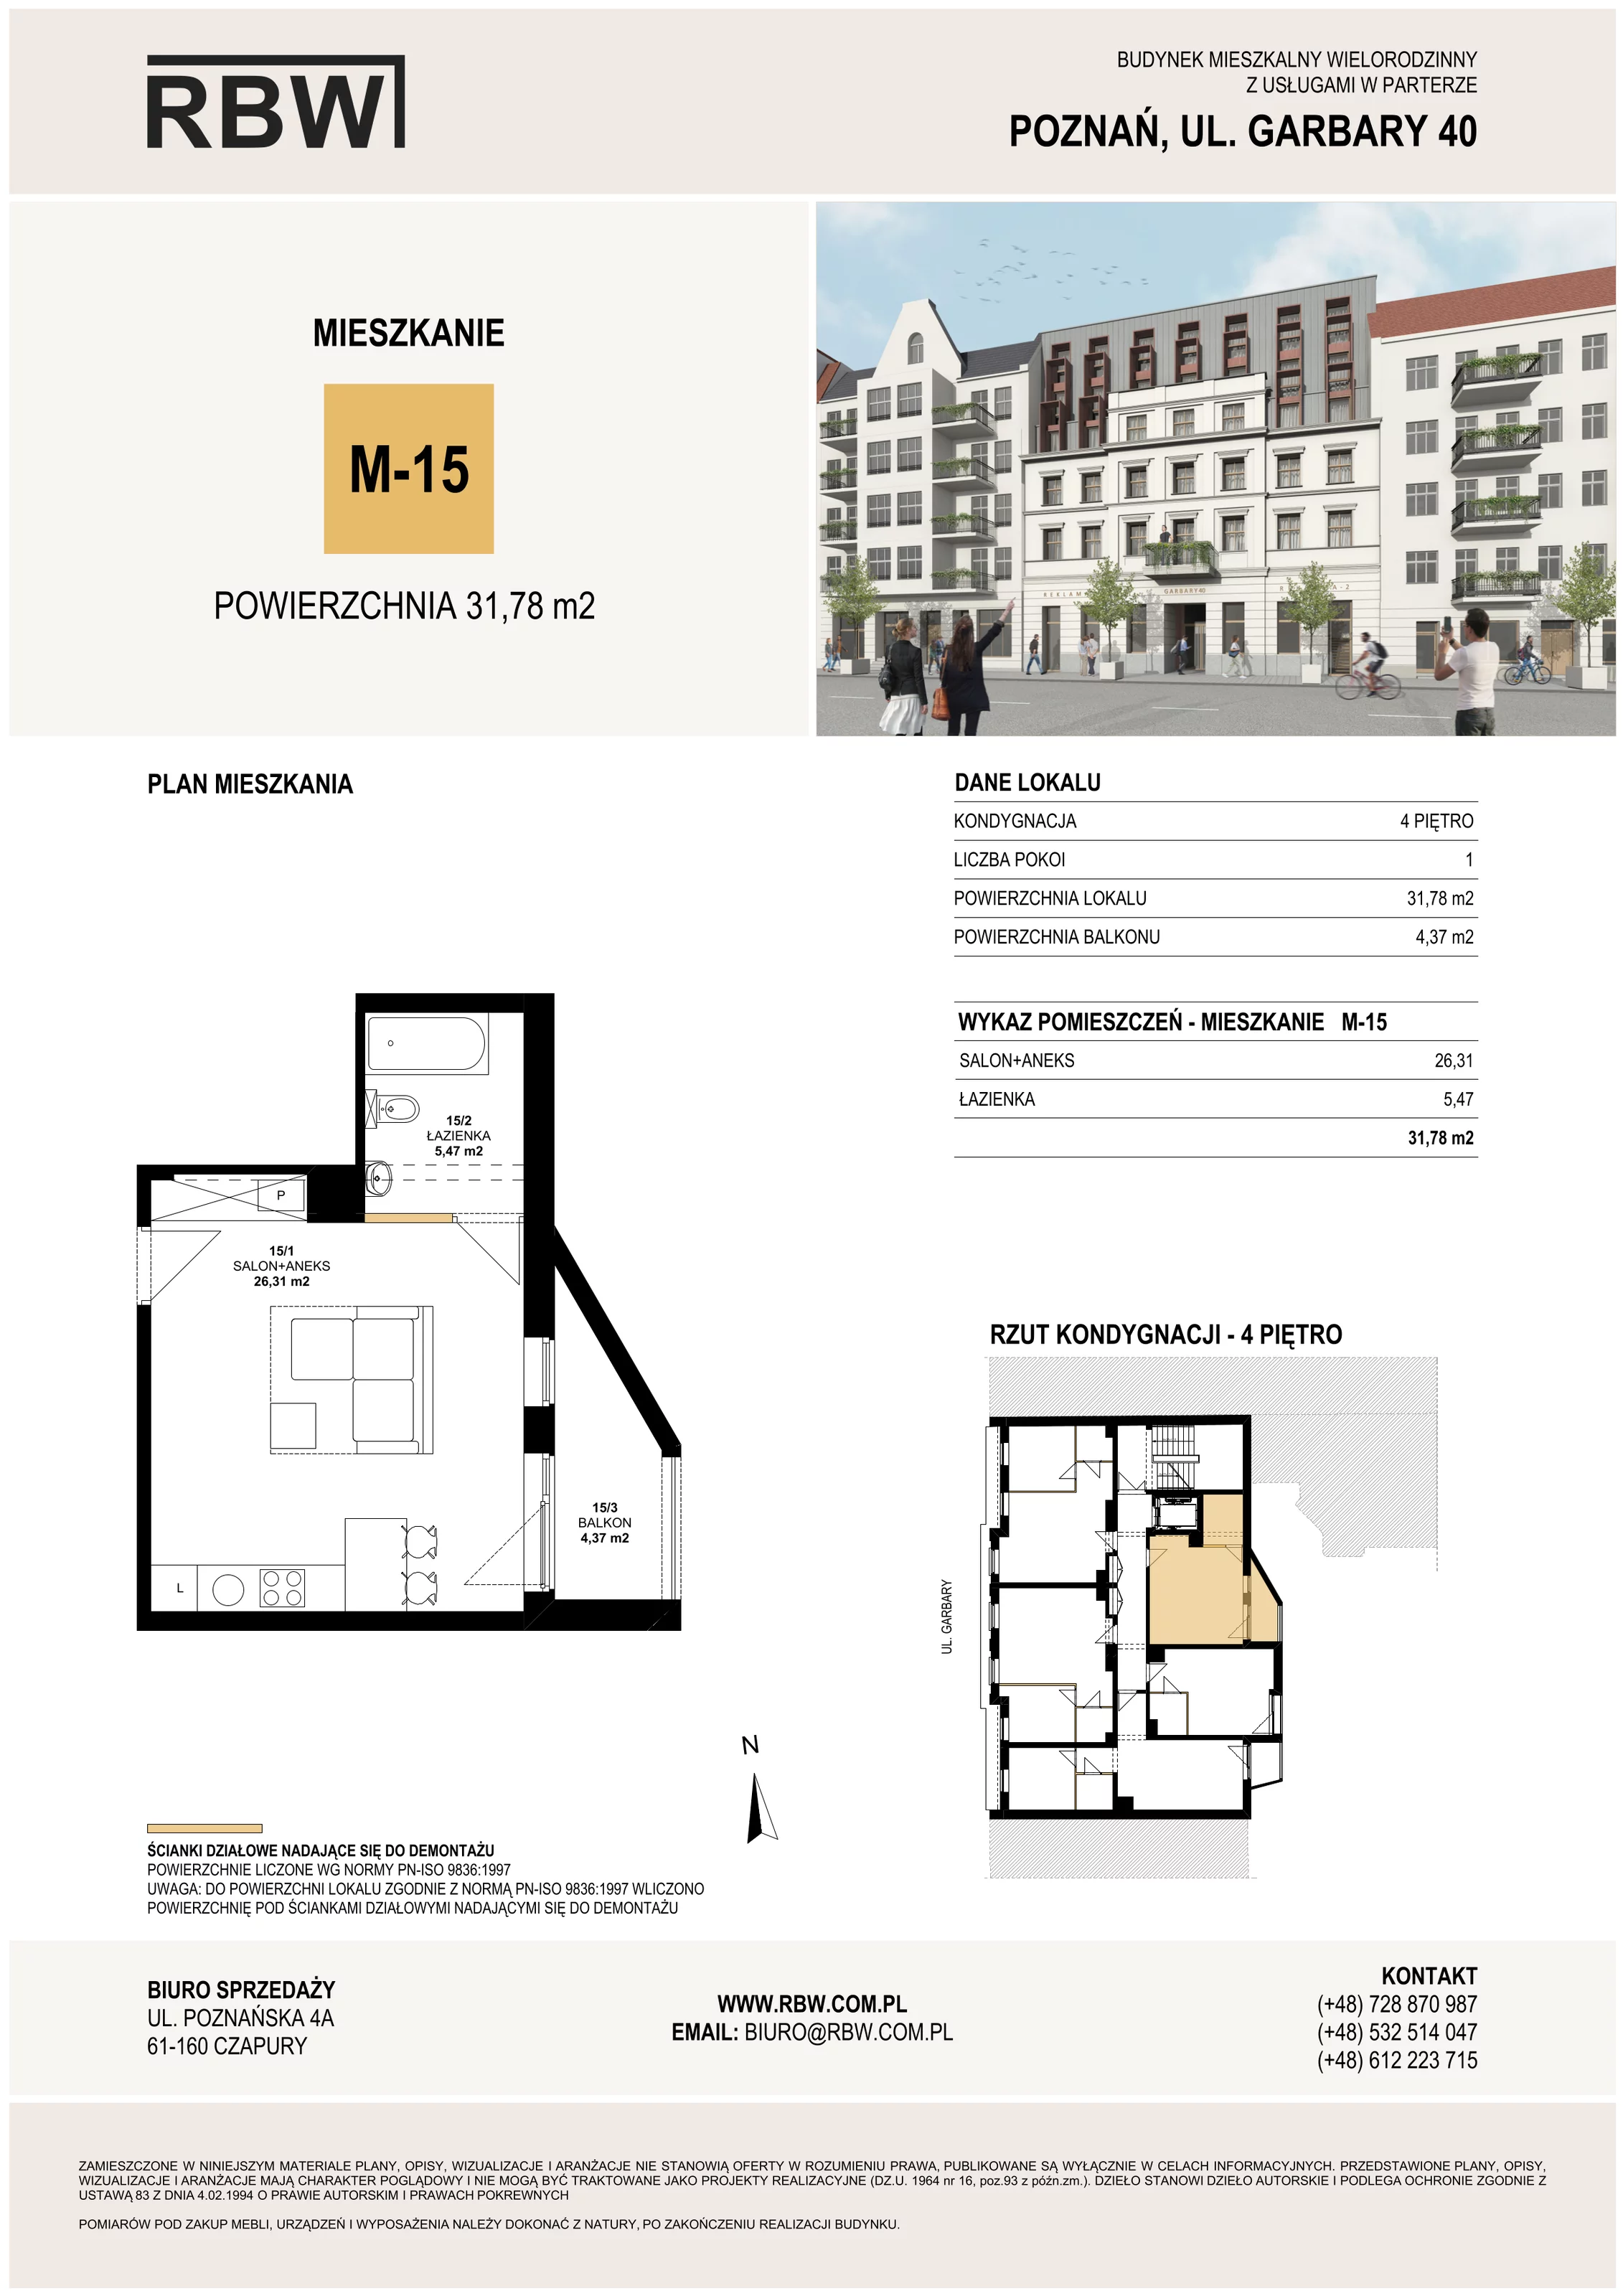 Mieszkanie 31,78 m², piętro 4, oferta nr M15, Garbary 40, Poznań, Stare Miasto, Stare Miasto, ul. Garbary 40